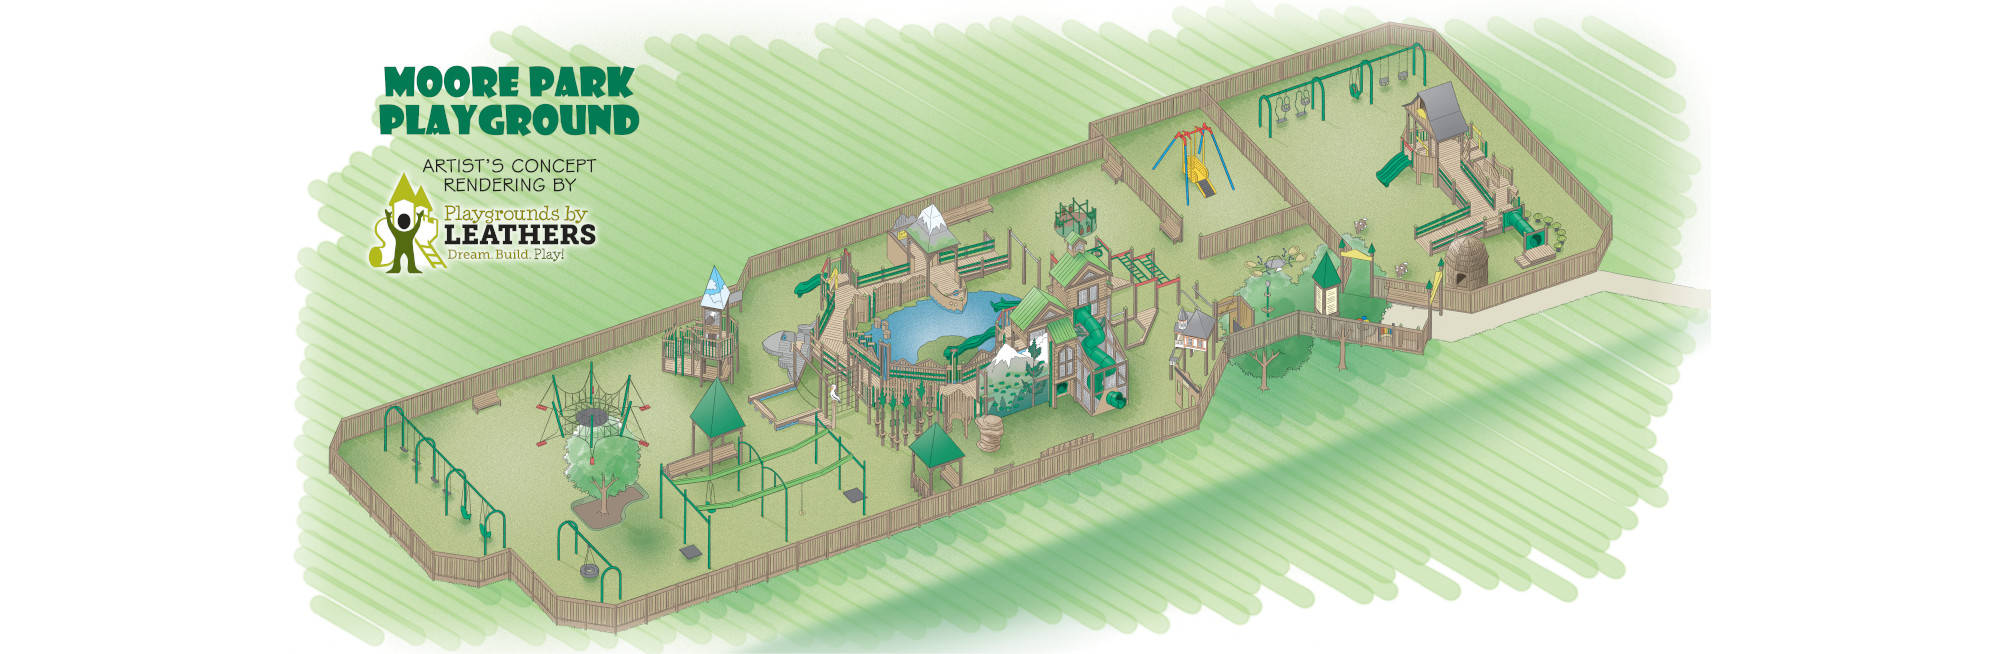 New Moore Park Playground